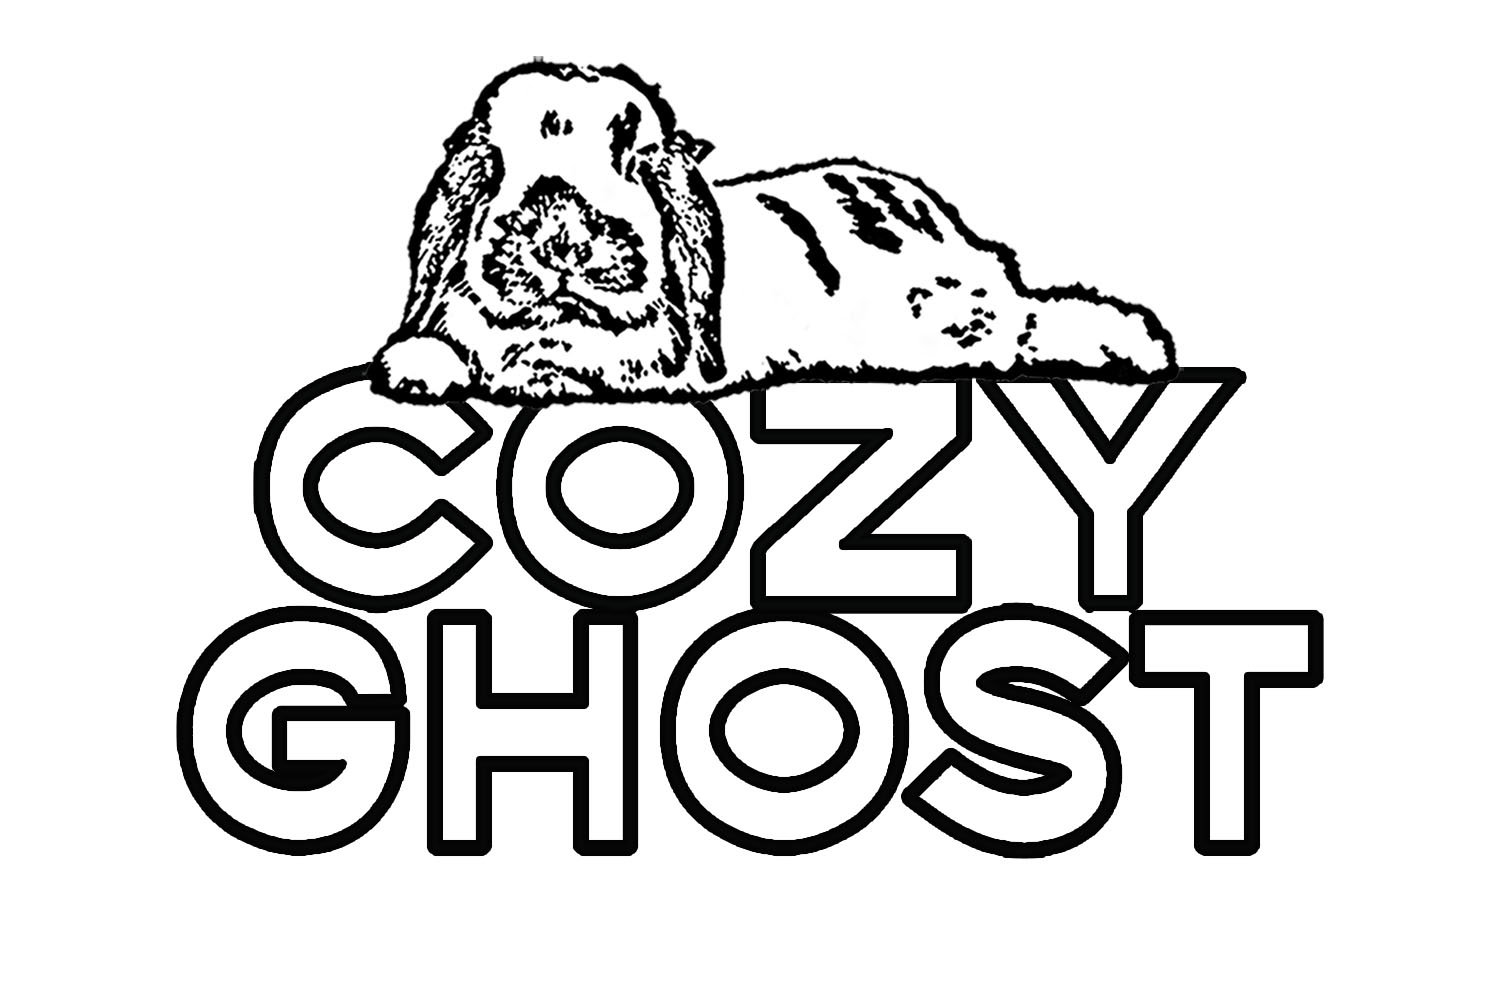 Cozy Ghost